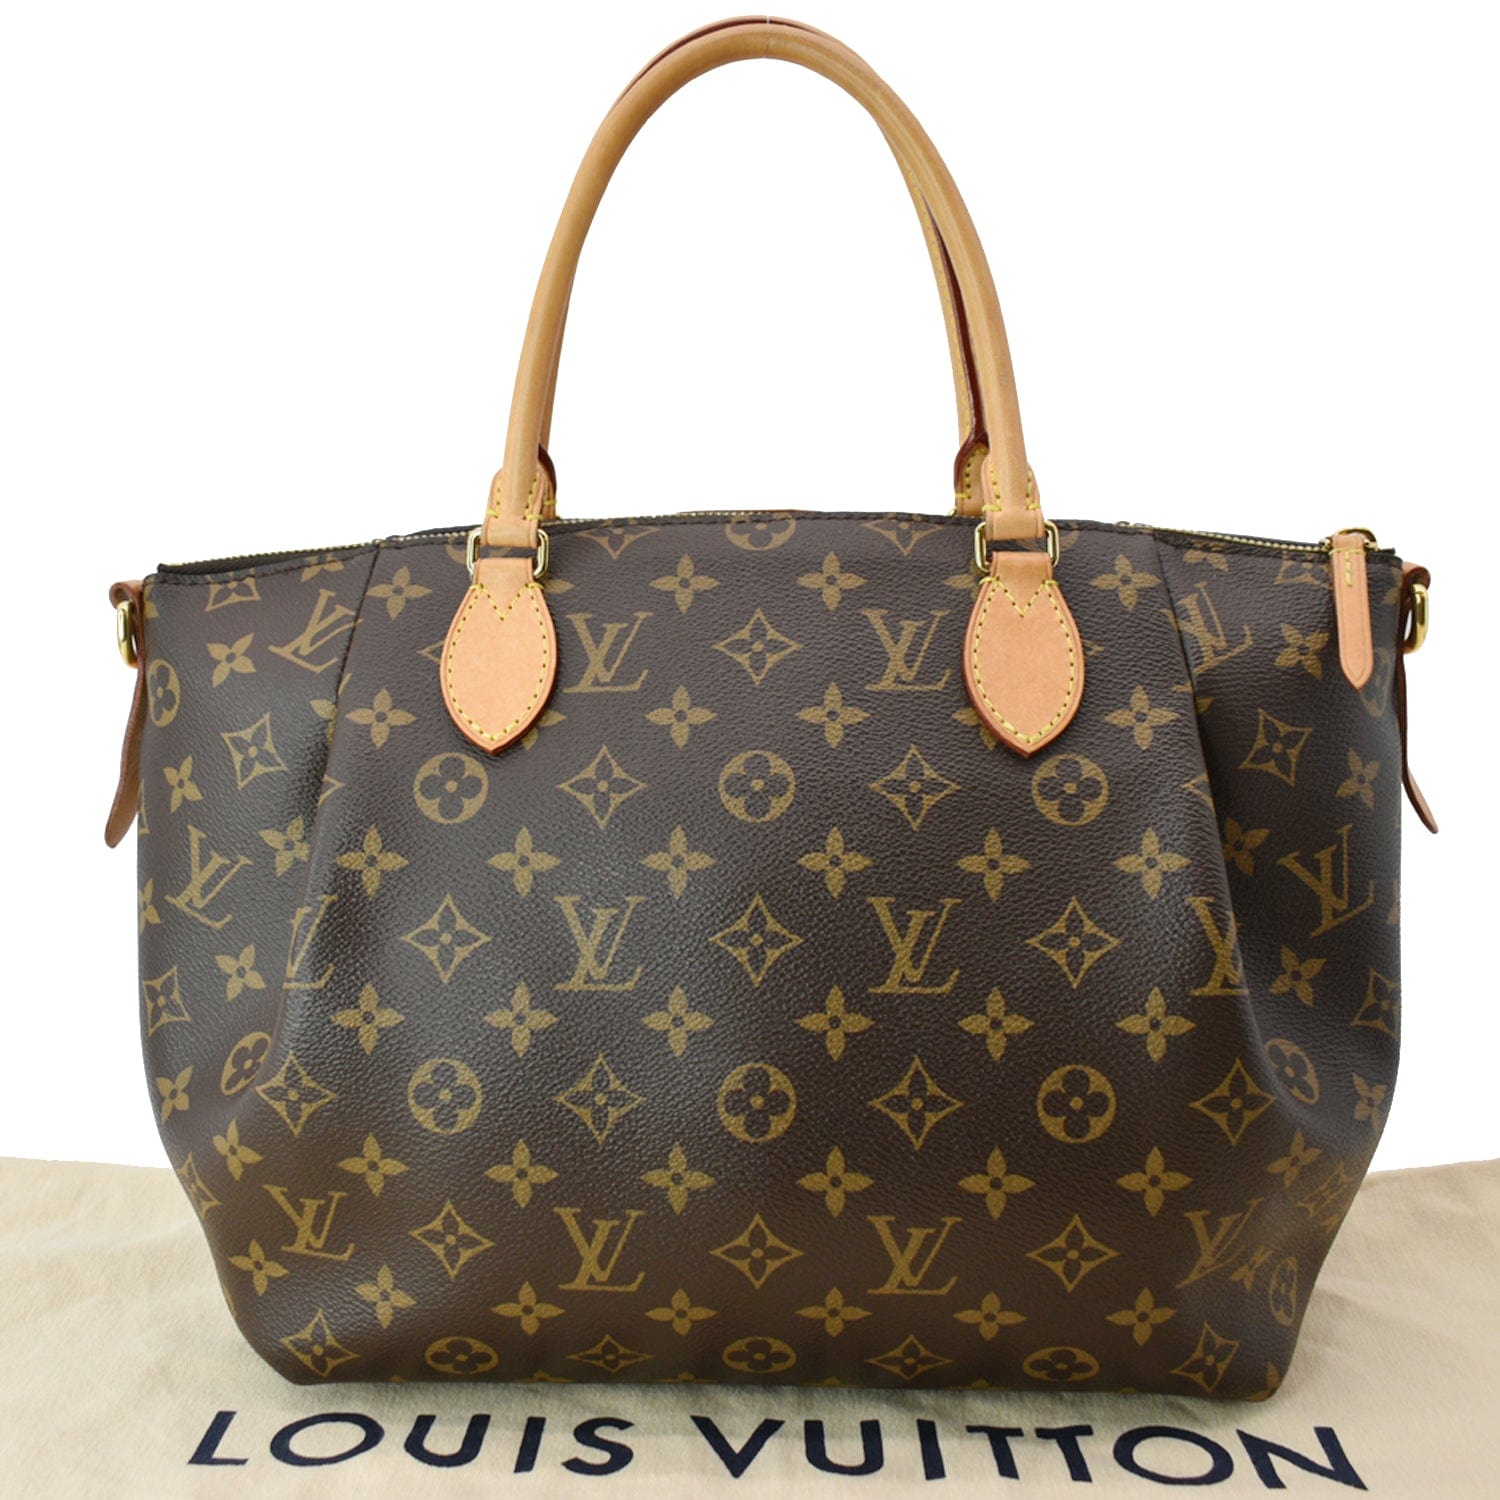 Turenne medium size handbag by Louis Vuitton <3 #carolinaherrera